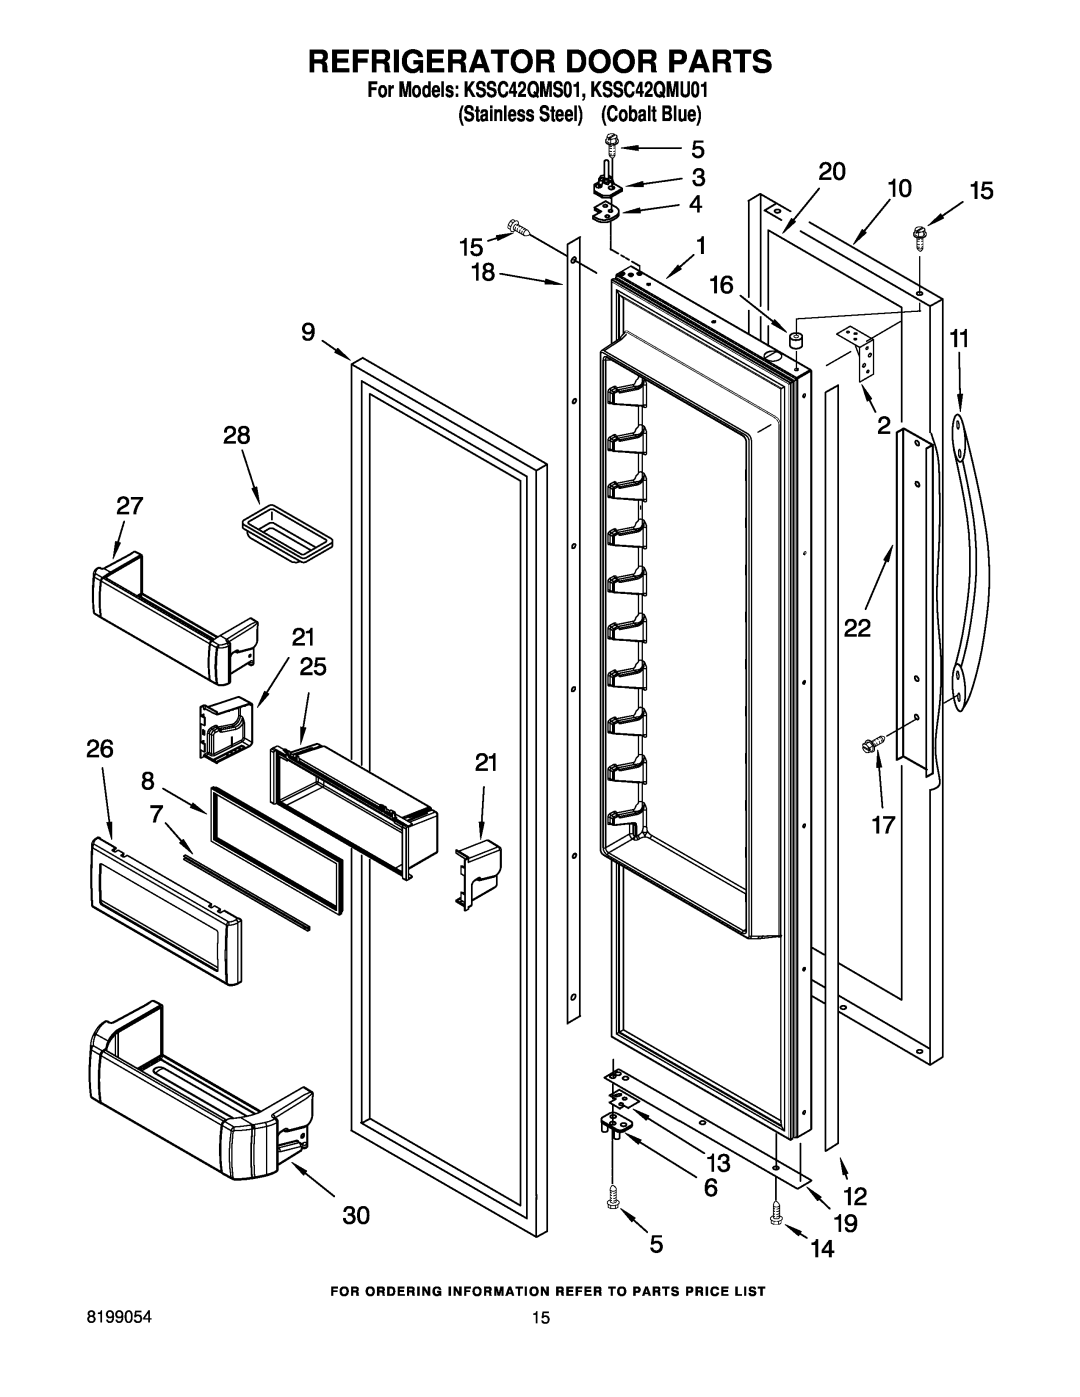 KitchenAid manual Refrigerator Door Parts, For Models KSSC42QMS01, KSSC42QMU01 Stainless Steel Cobalt Blue 